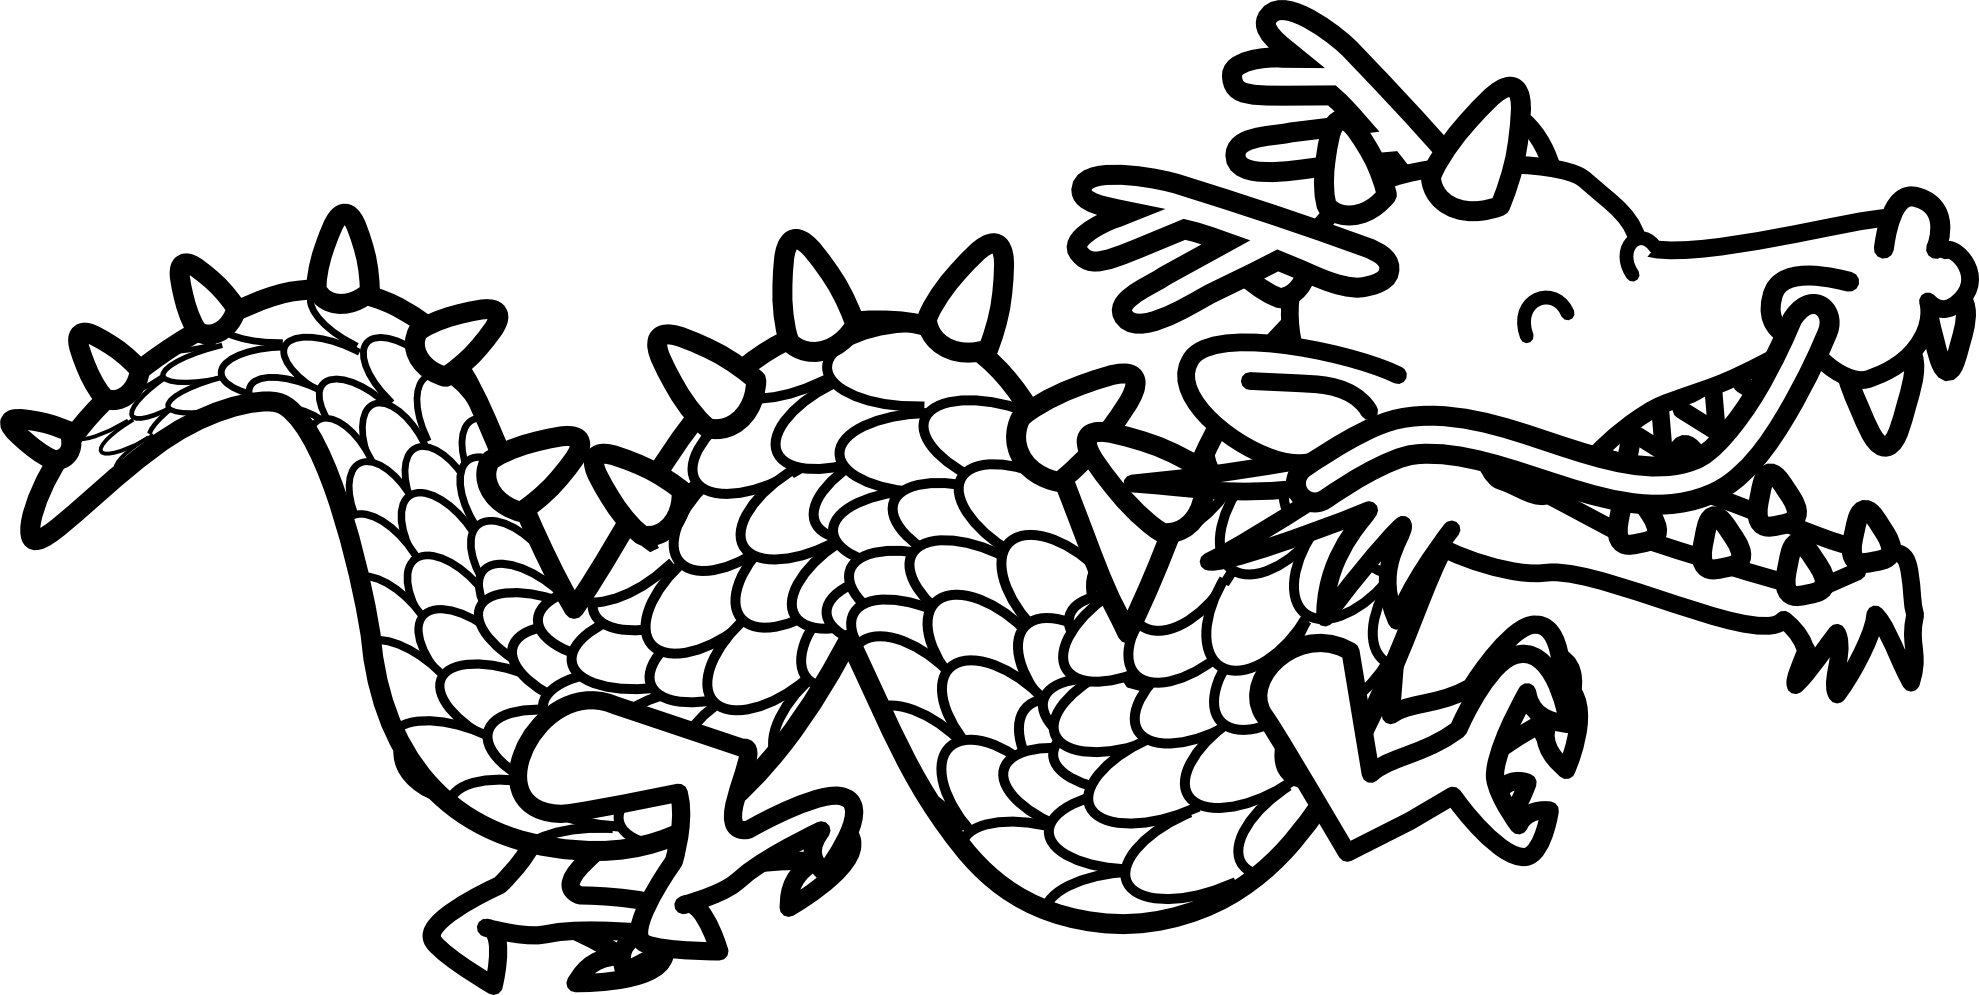 Dragon Image Black And White 